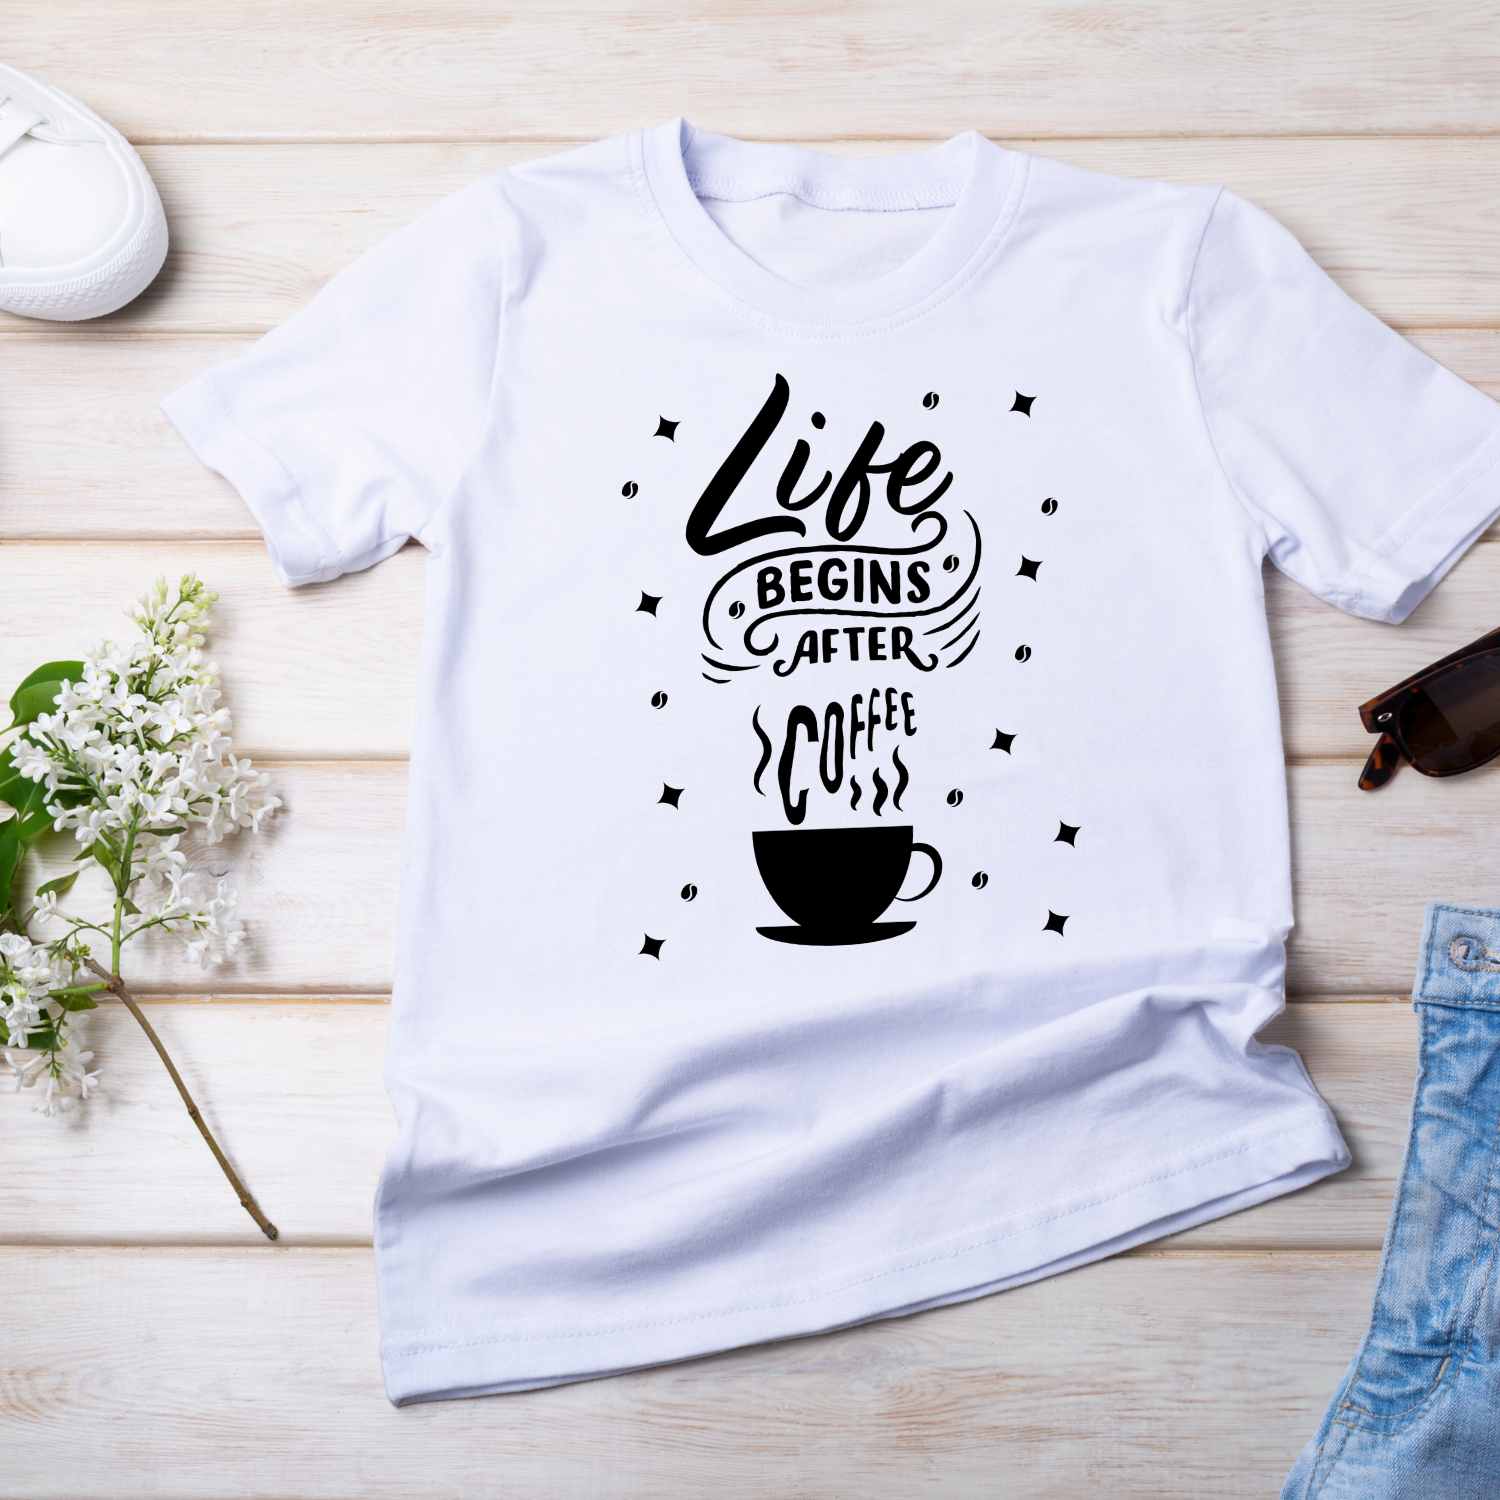 Life Begins after Coffee T-shirt Design